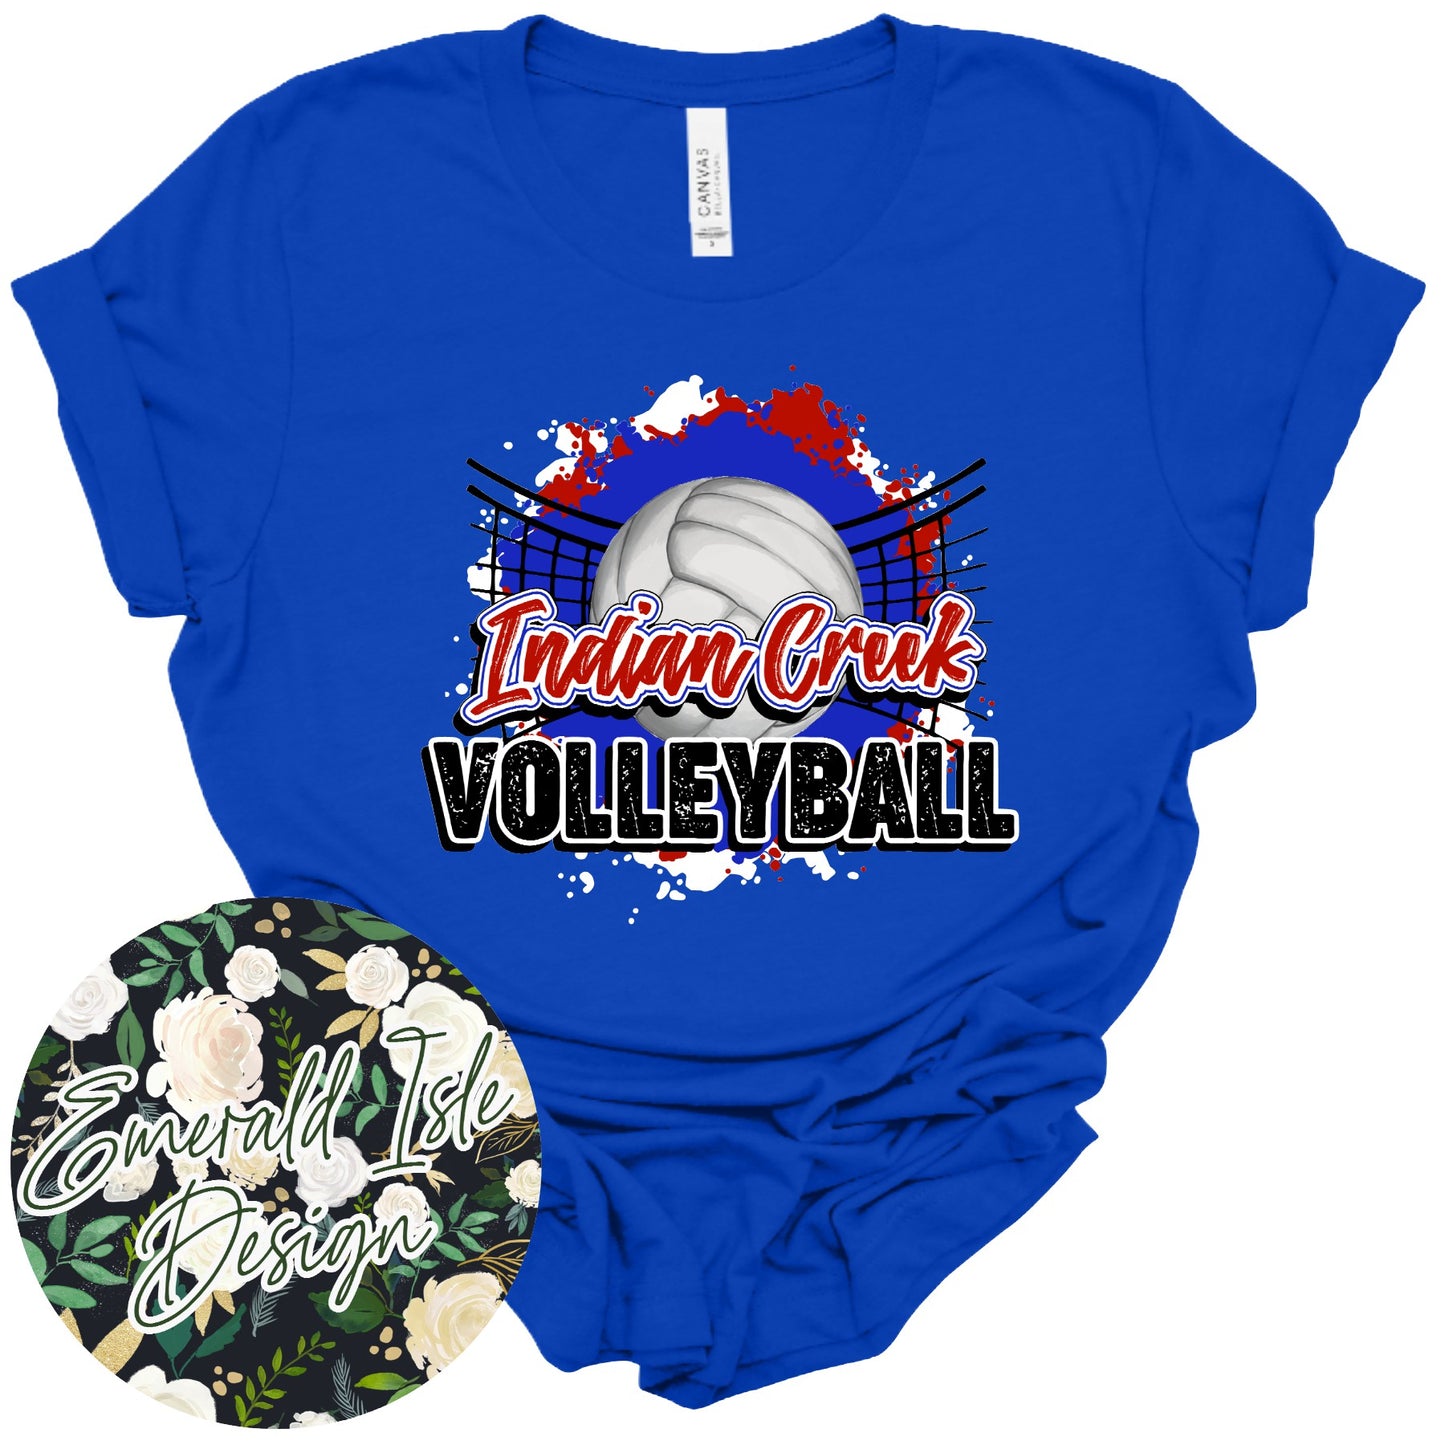 Indian Creek Volleyball Design